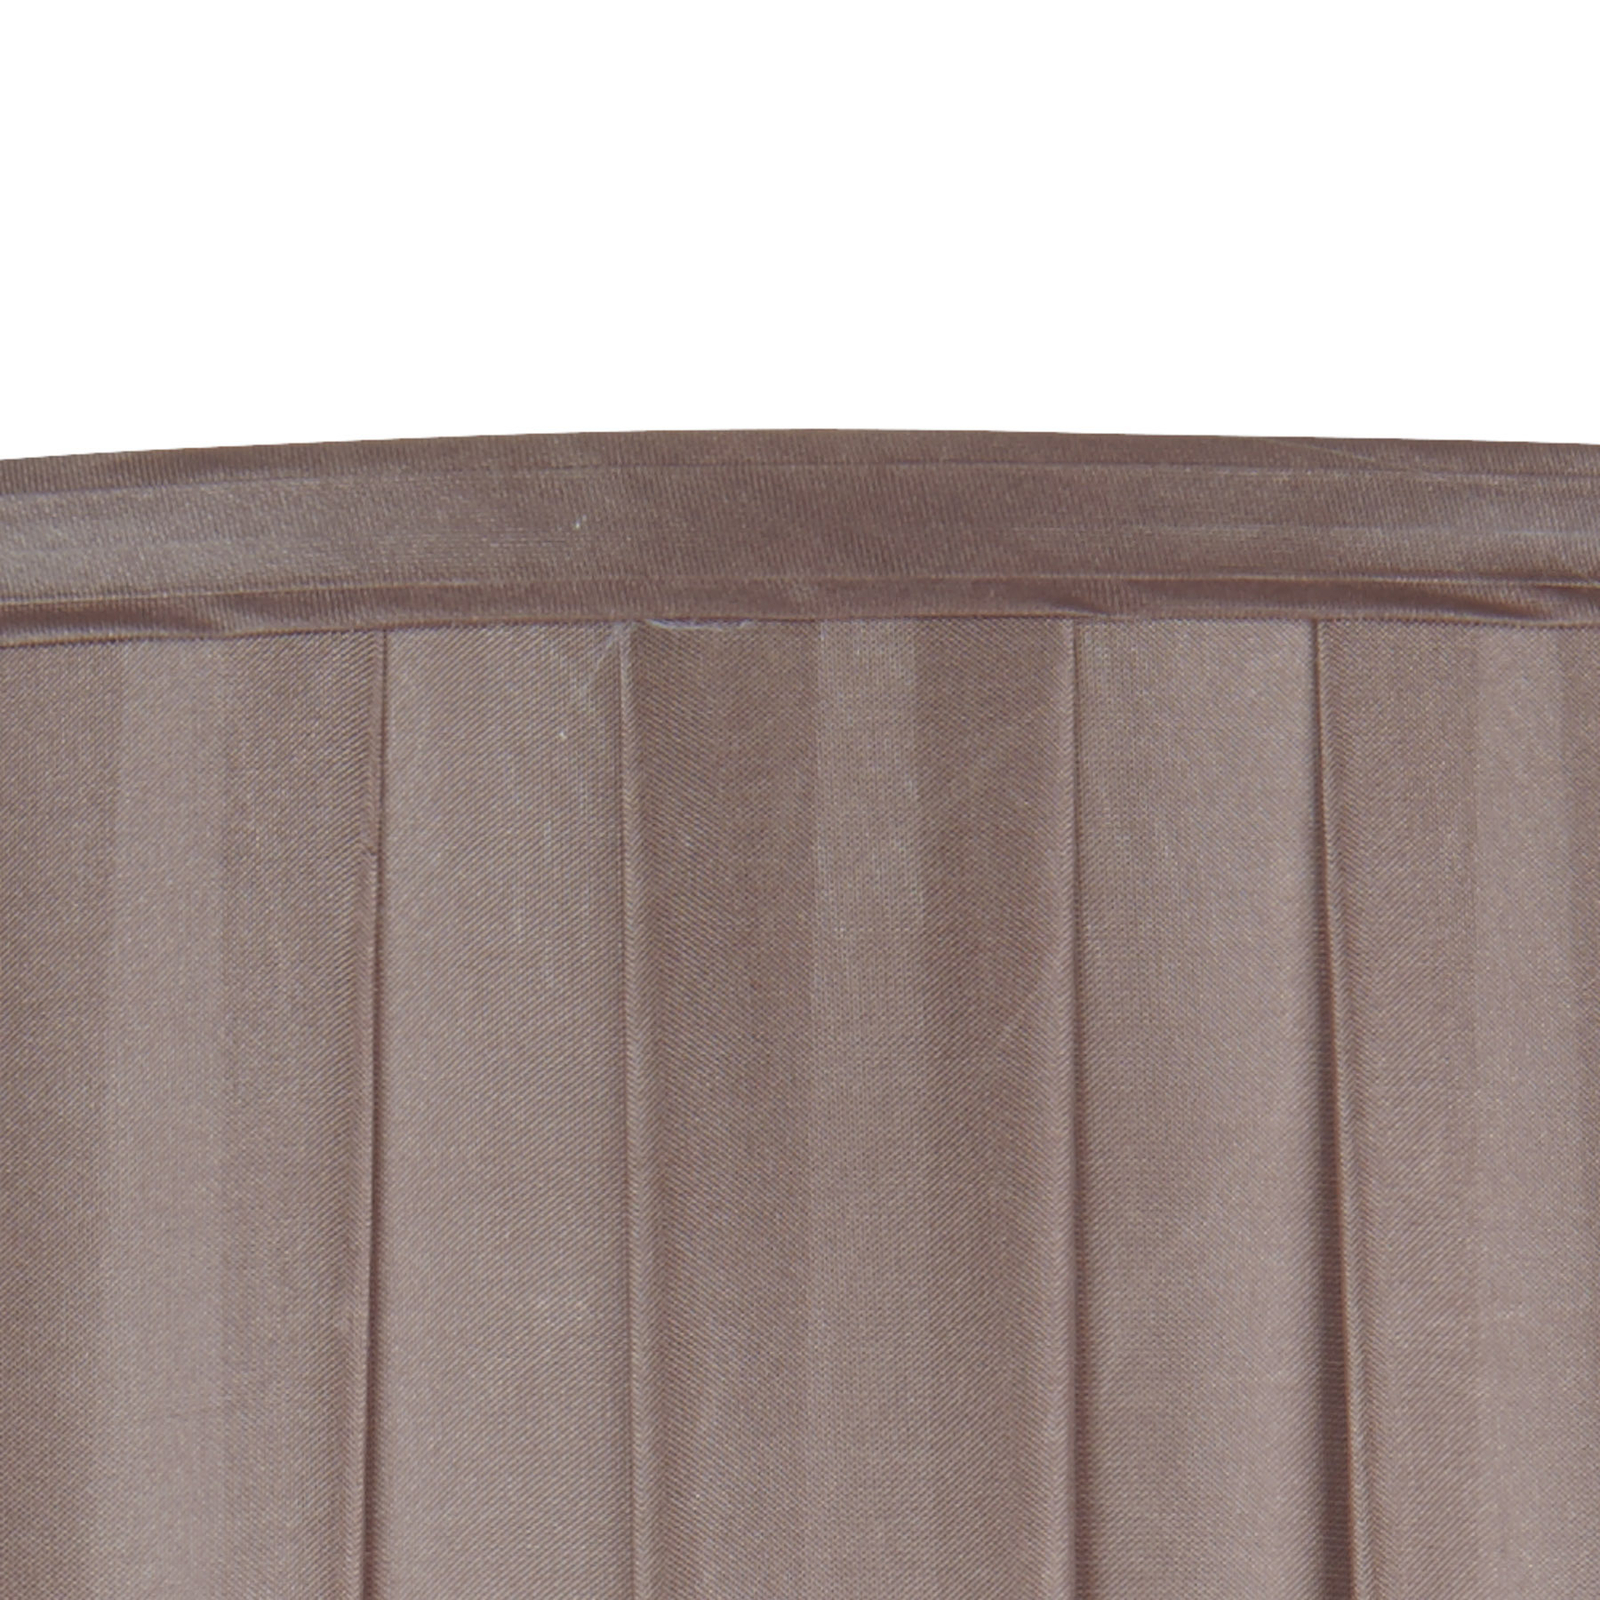 Stolná lampa Greyson textilné tienidlo v hnedom